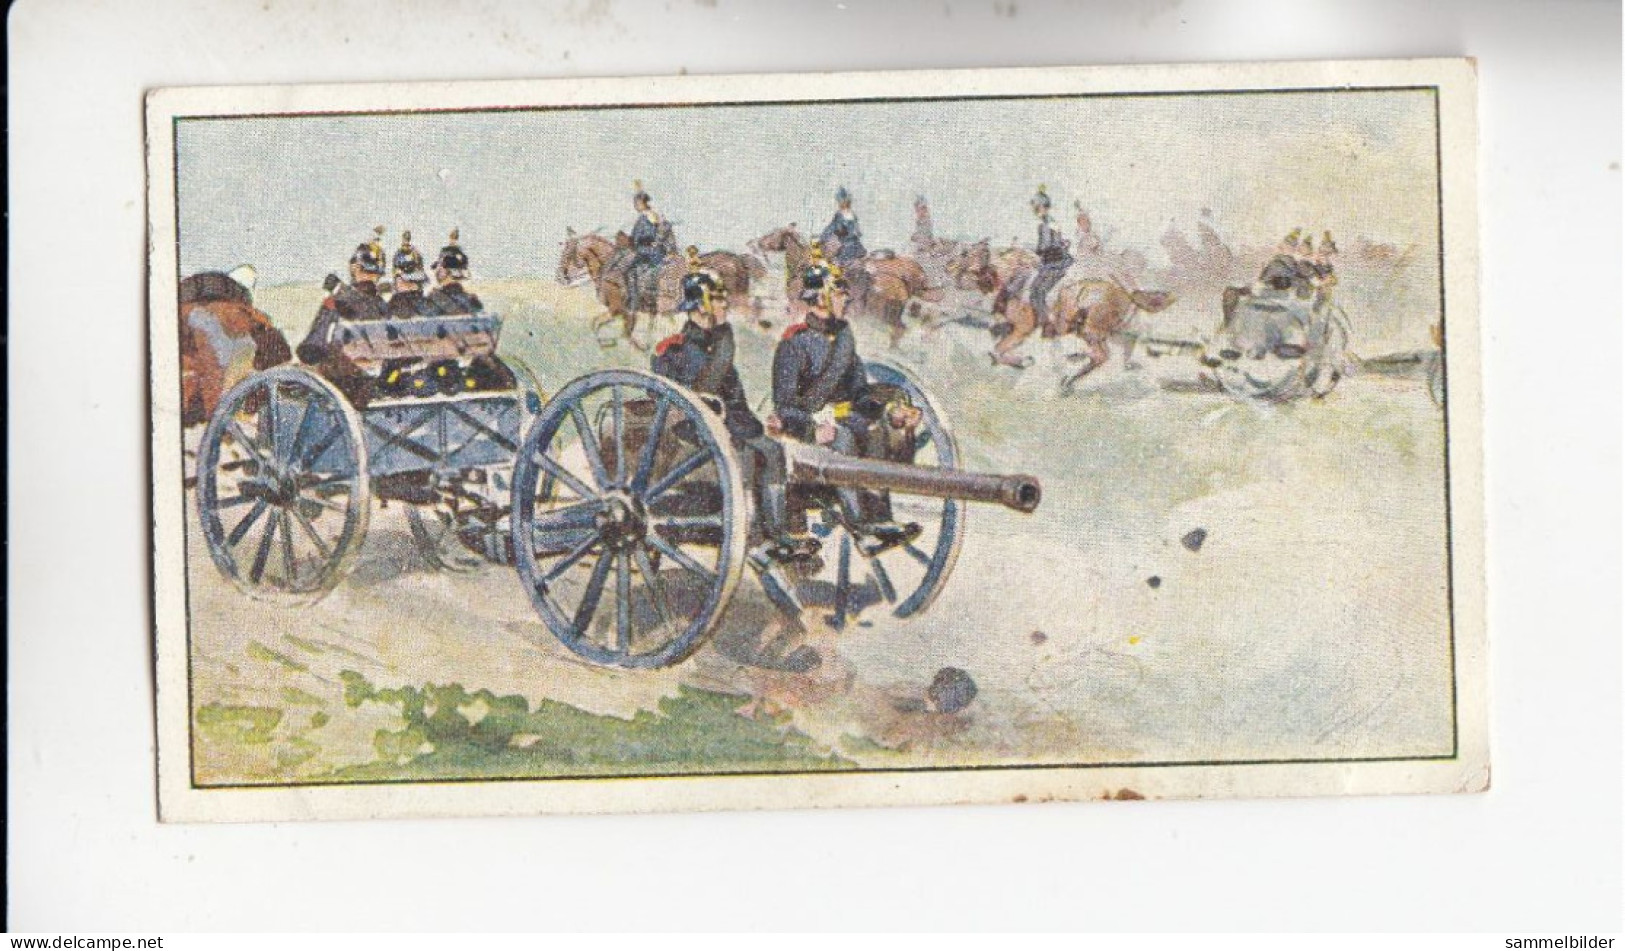 Actien Gesellschaft  Artillerie Batterie - Galopp     Serie  51 #6 Von 1900 - Stollwerck